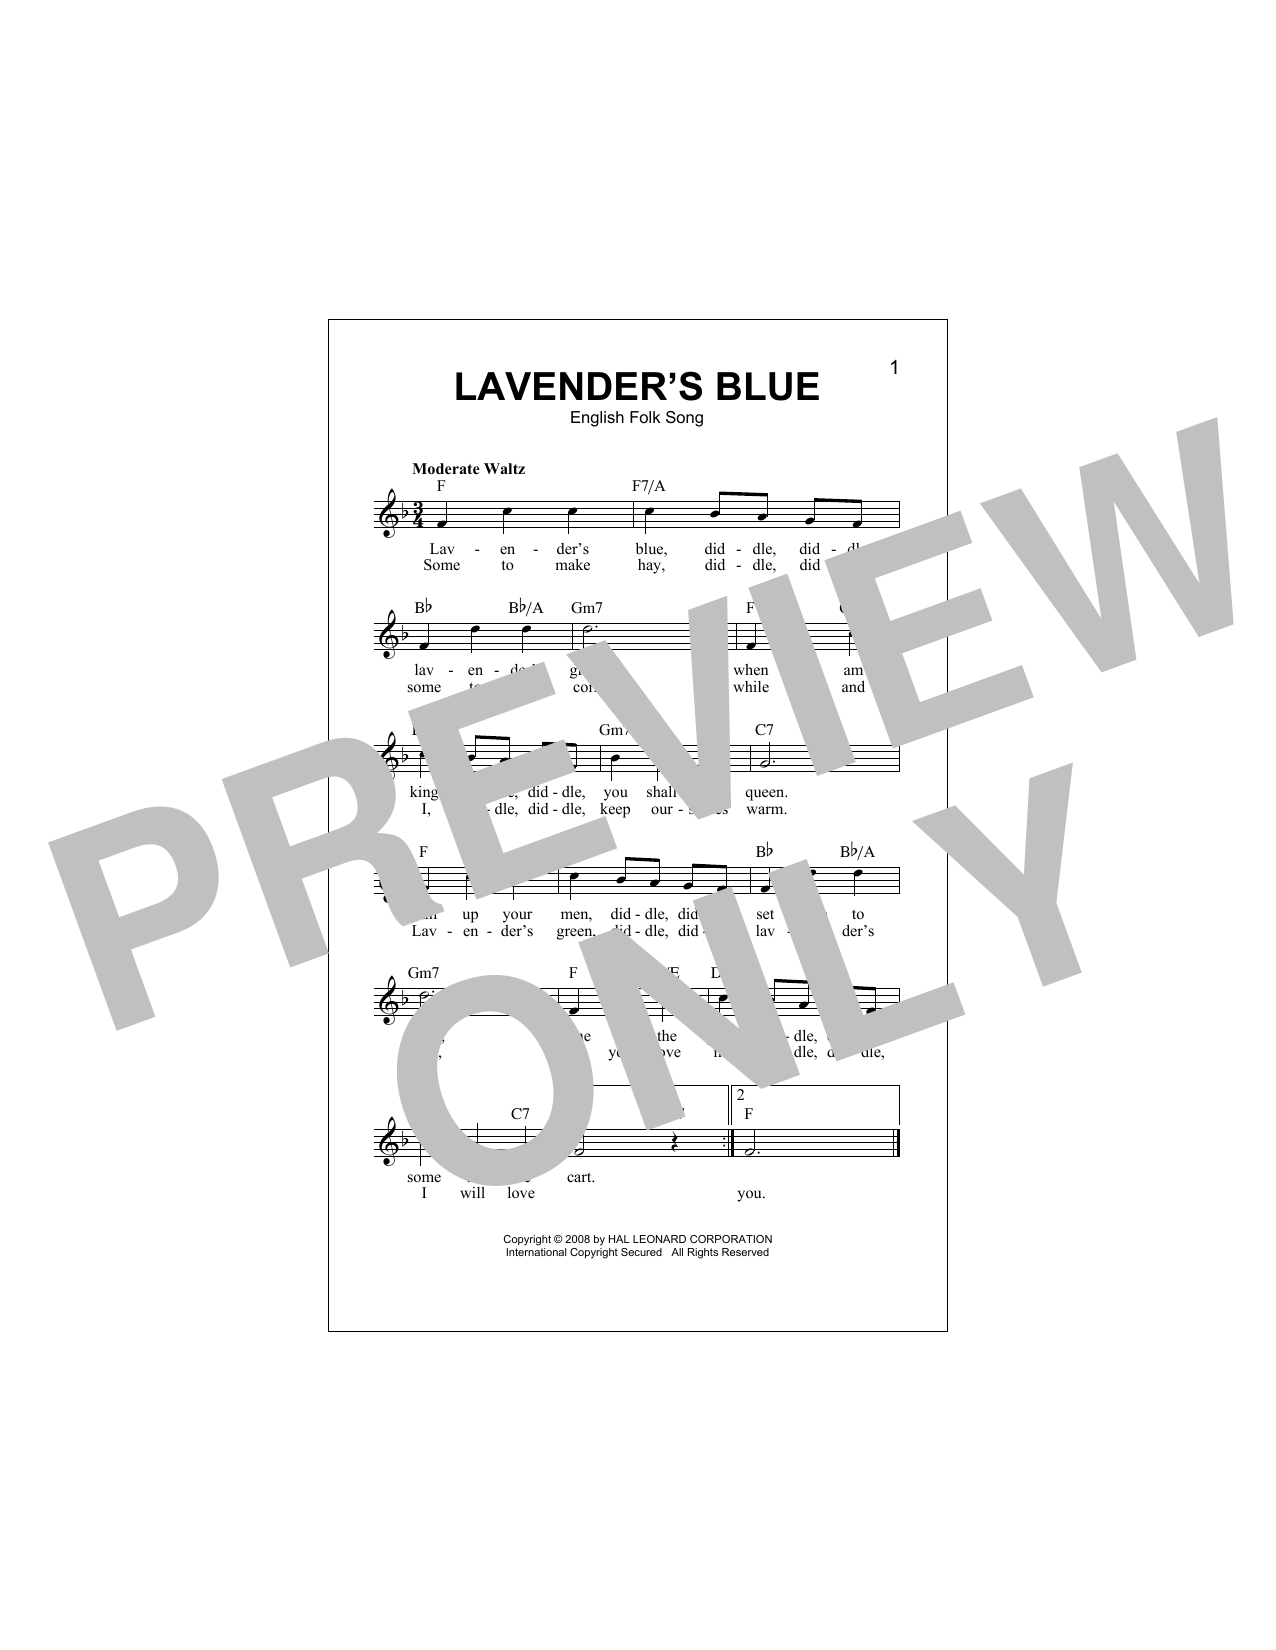 English Folk Song Lavender's Blue Sheet Music Notes & Chords for Melody Line, Lyrics & Chords - Download or Print PDF